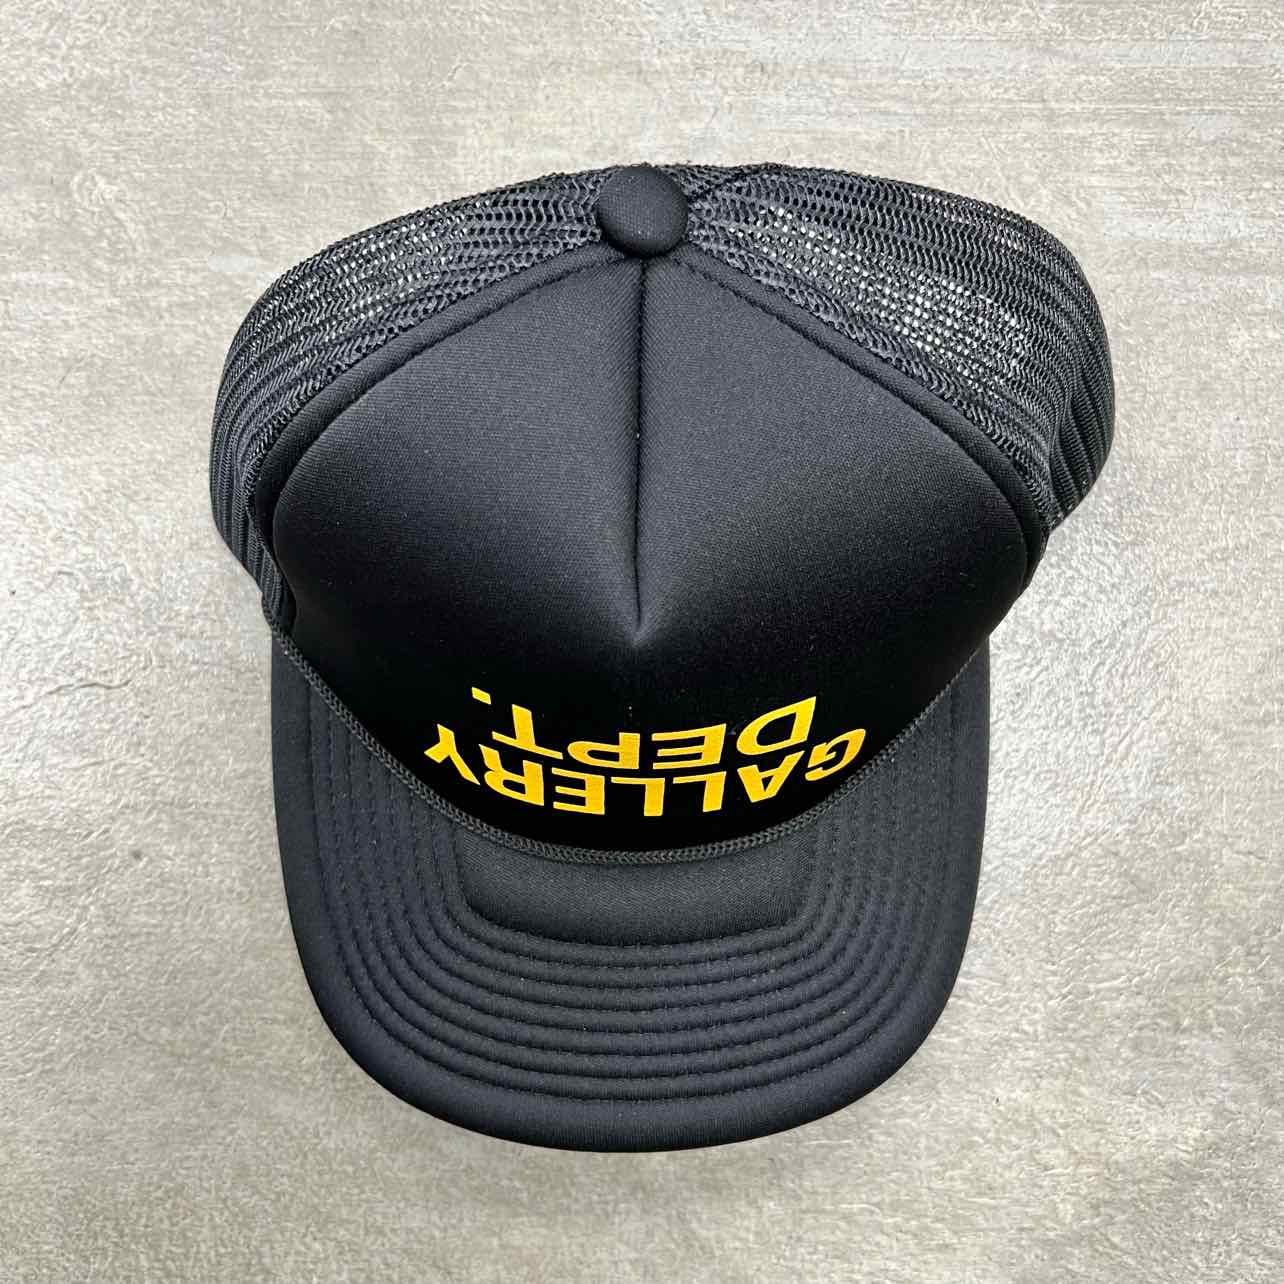 Gallery DEPT. Trucker Hat "UPSIDE DOWN LOGO" New Black